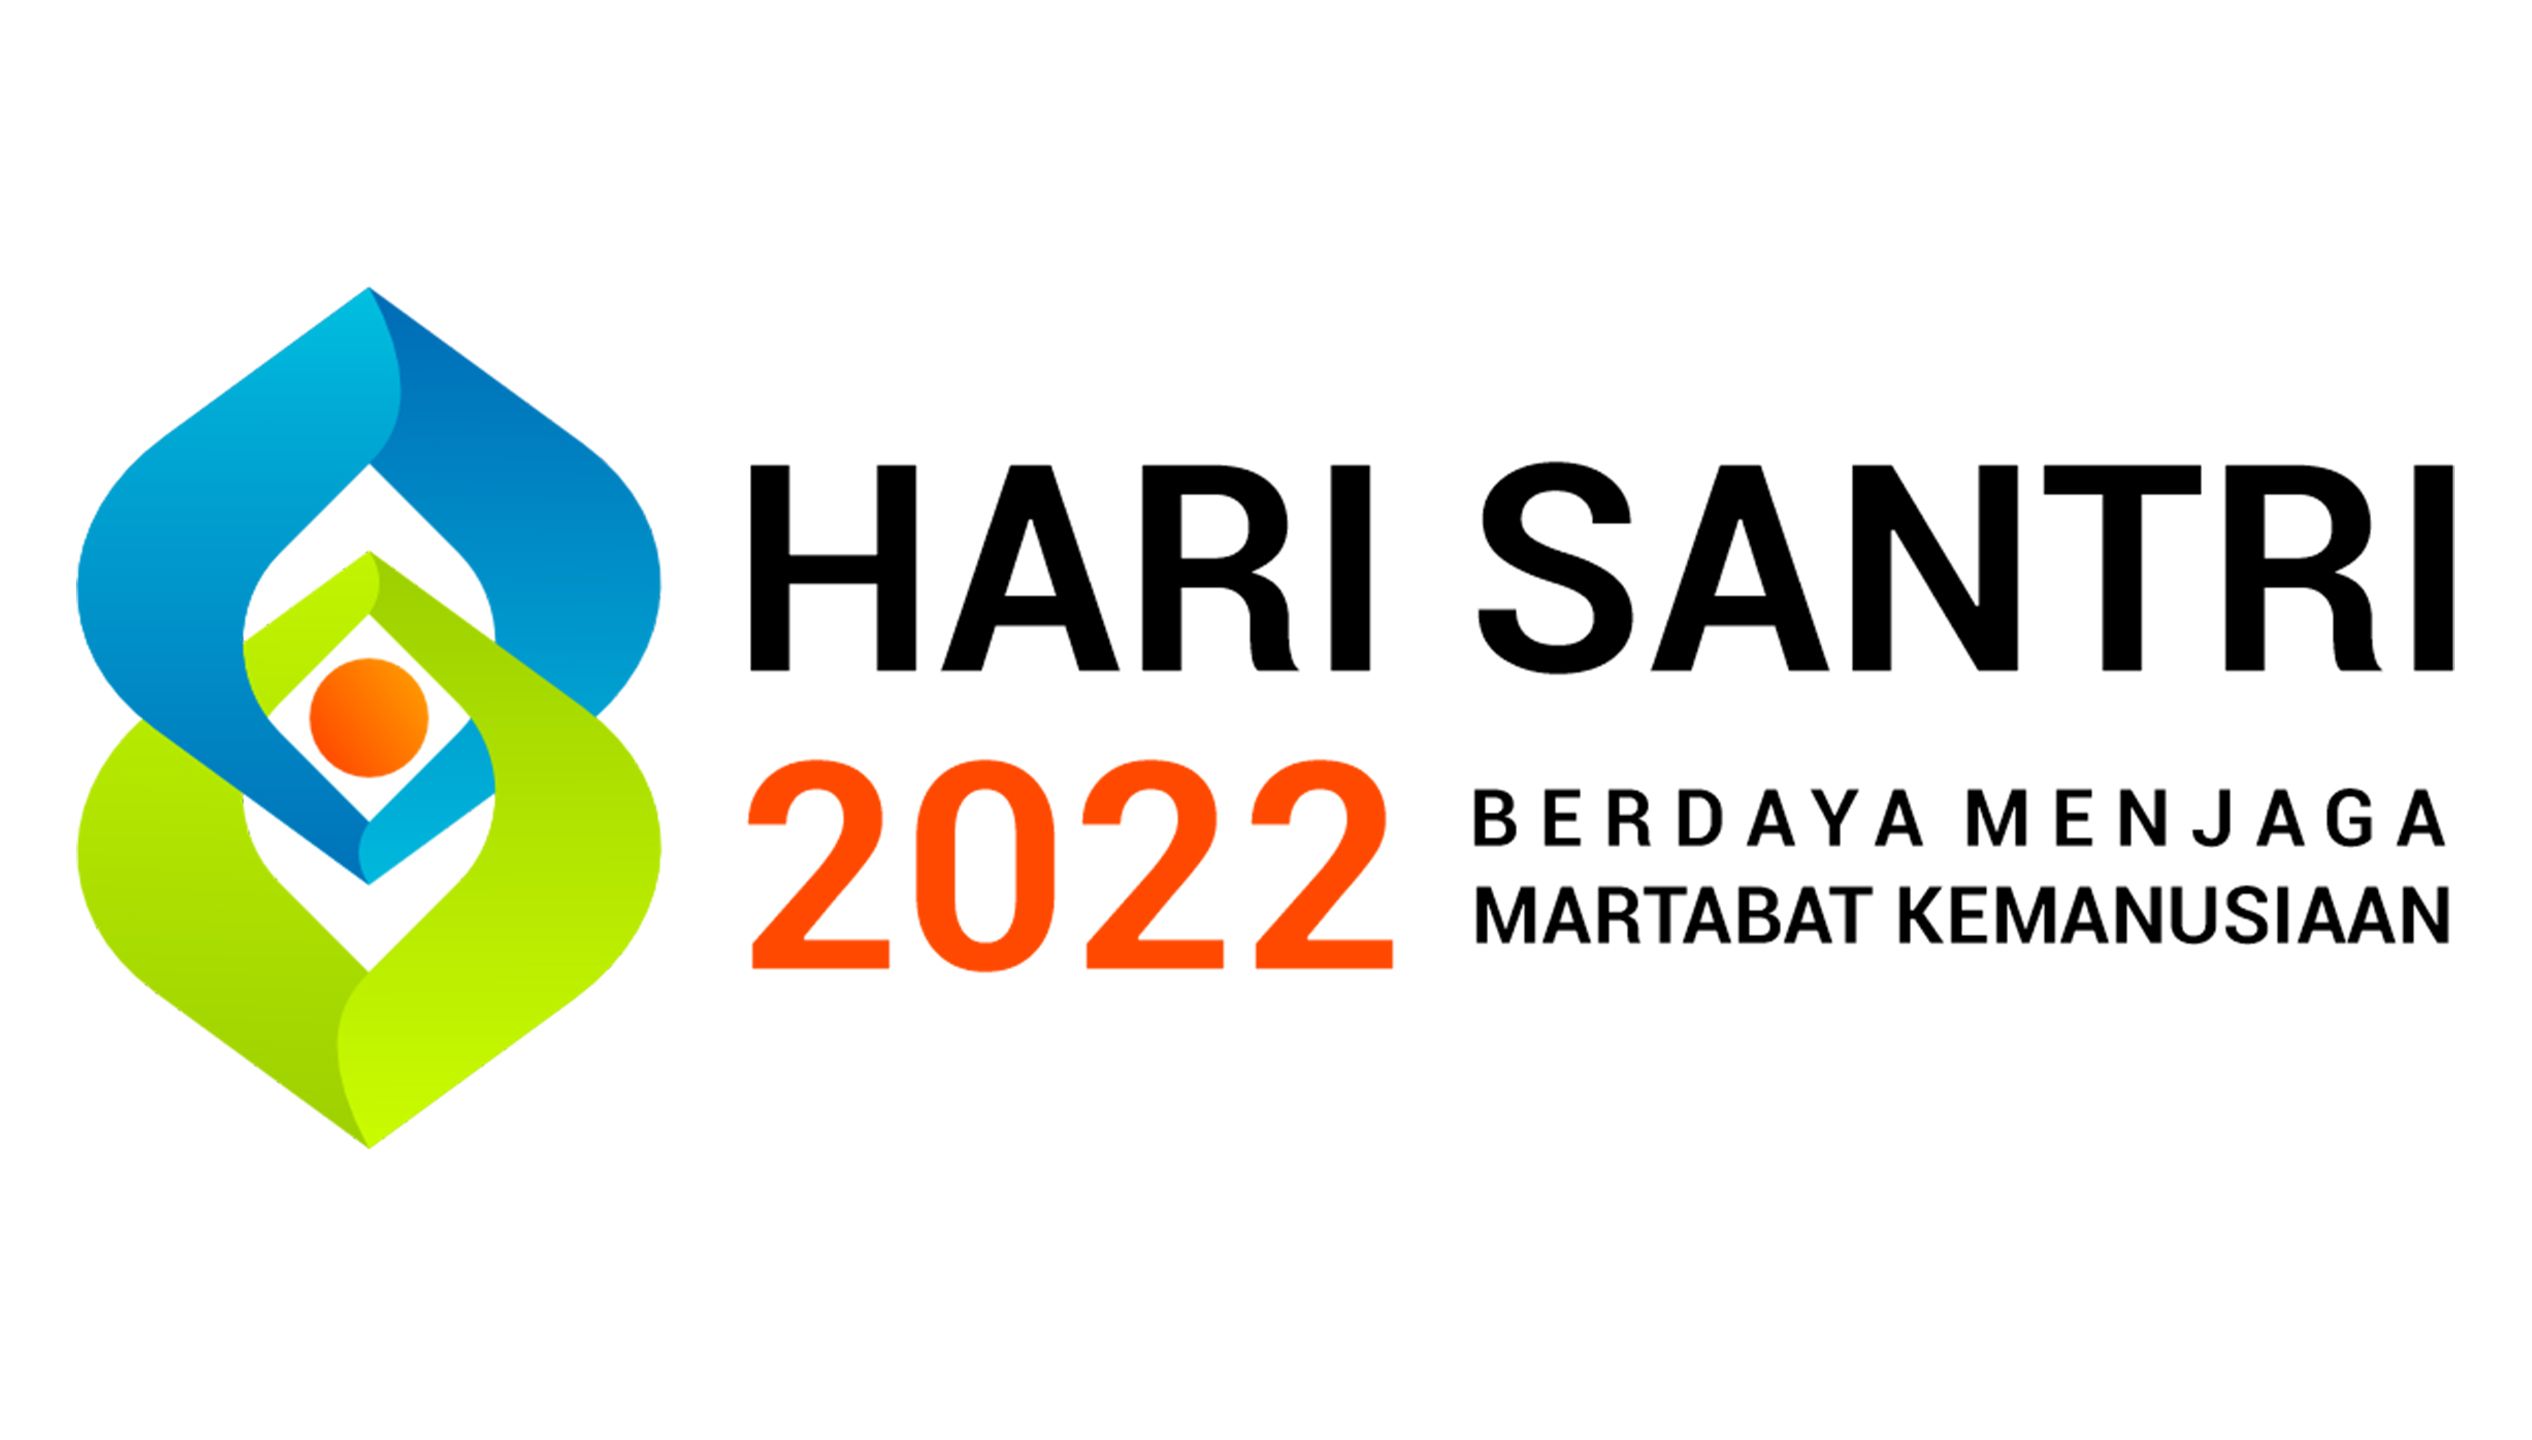 Logo Hari Santri Nasional 2022